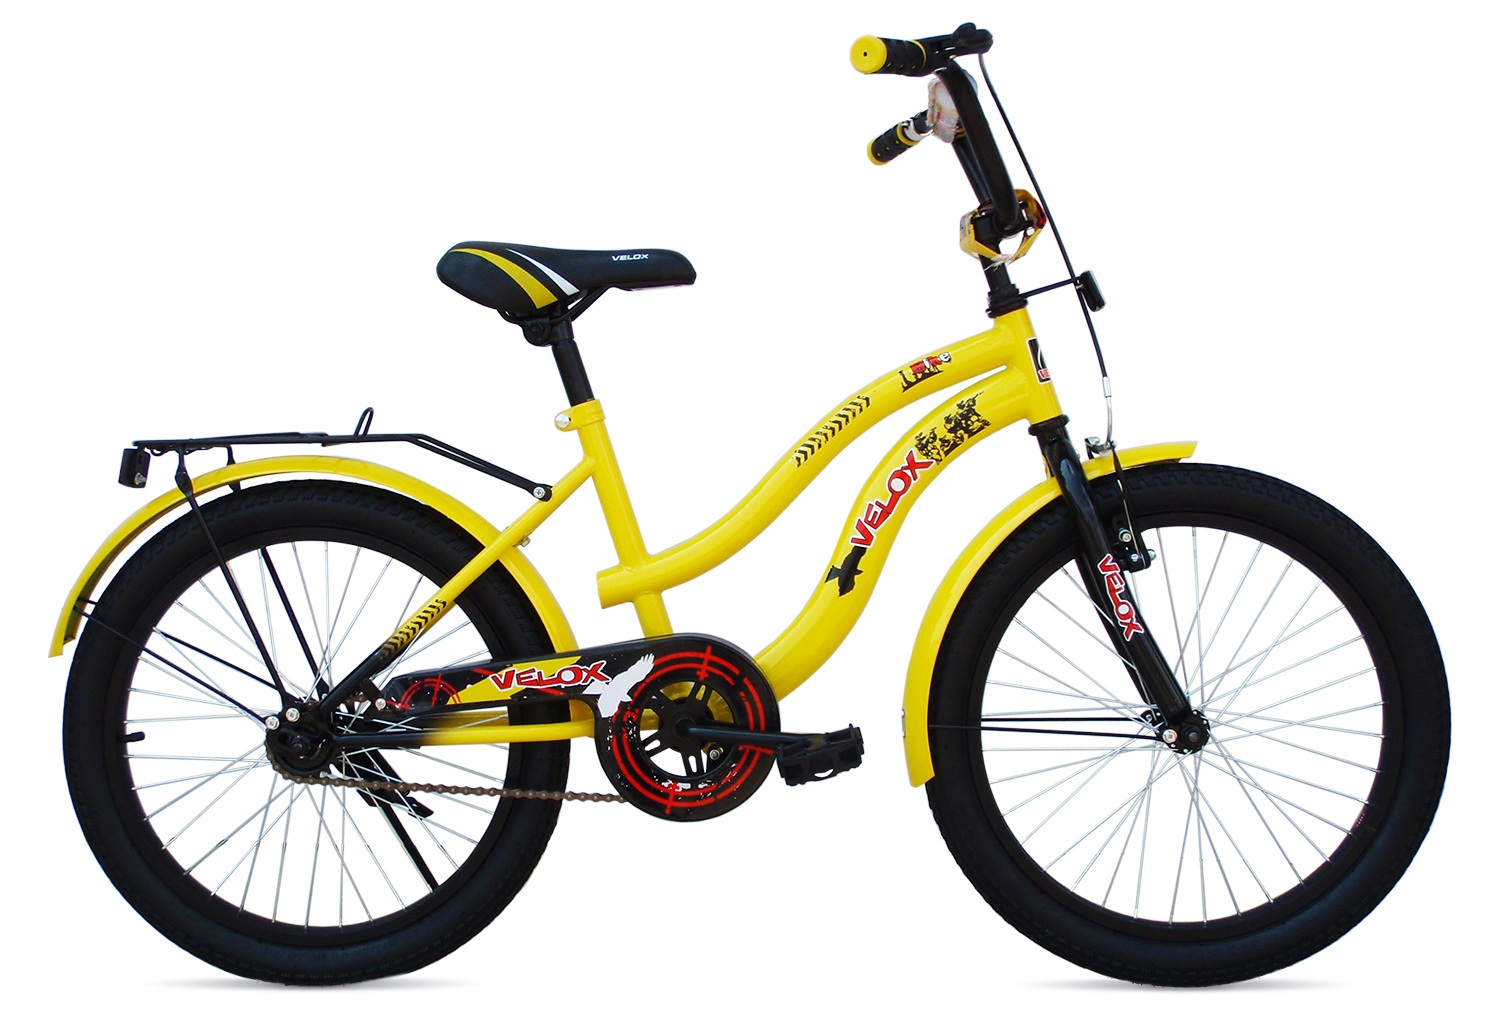 Двухколесный велосипед VELOX 2007 желтый